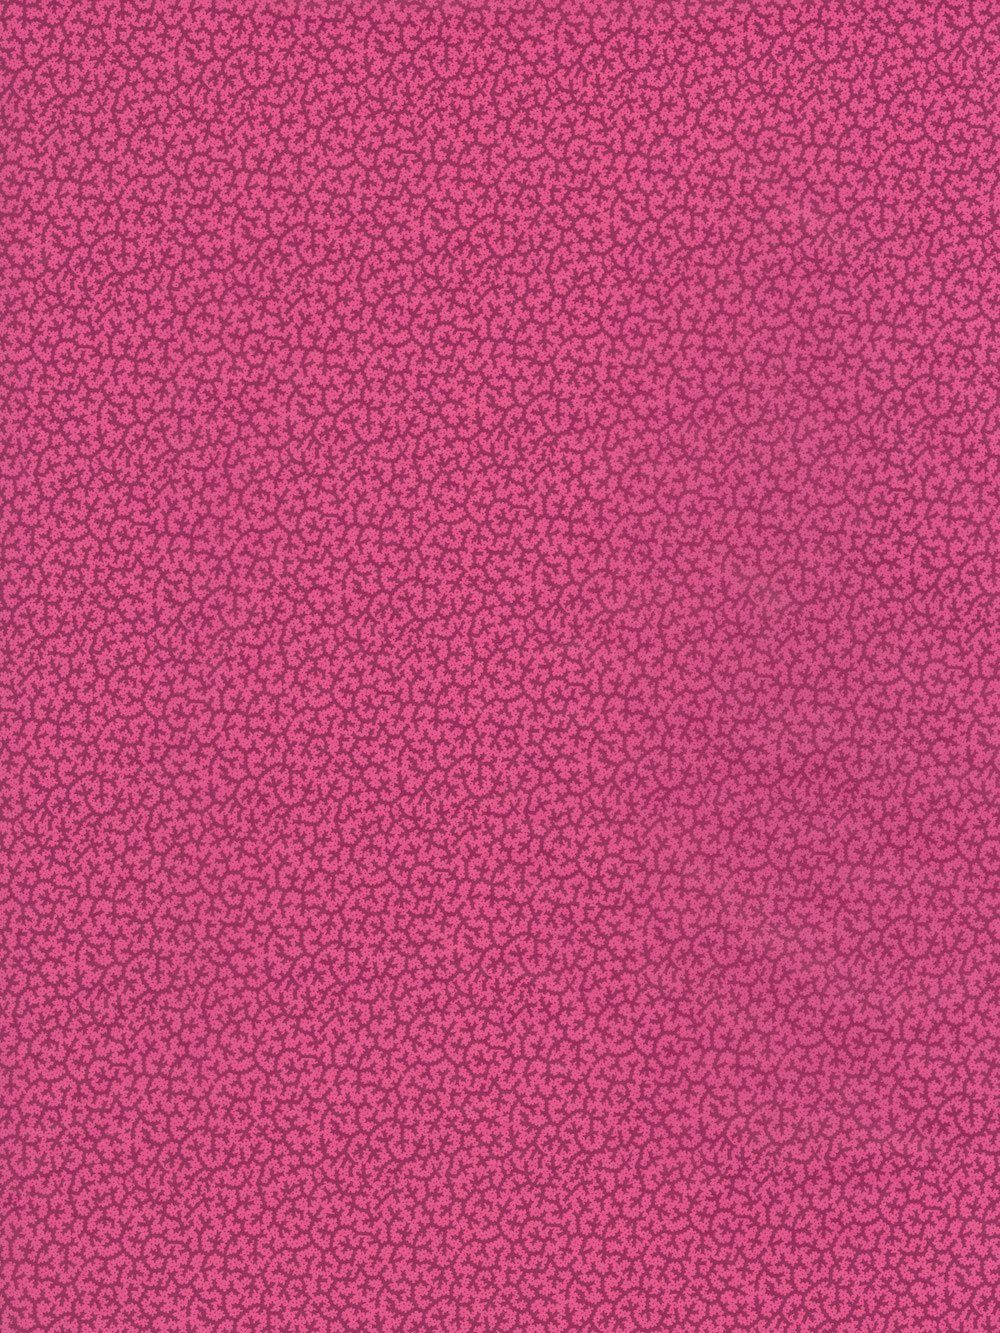 H-Erzmade Zeichenpapier Décopatch-Papier 710 Ranken pink, 30 x 40 cm